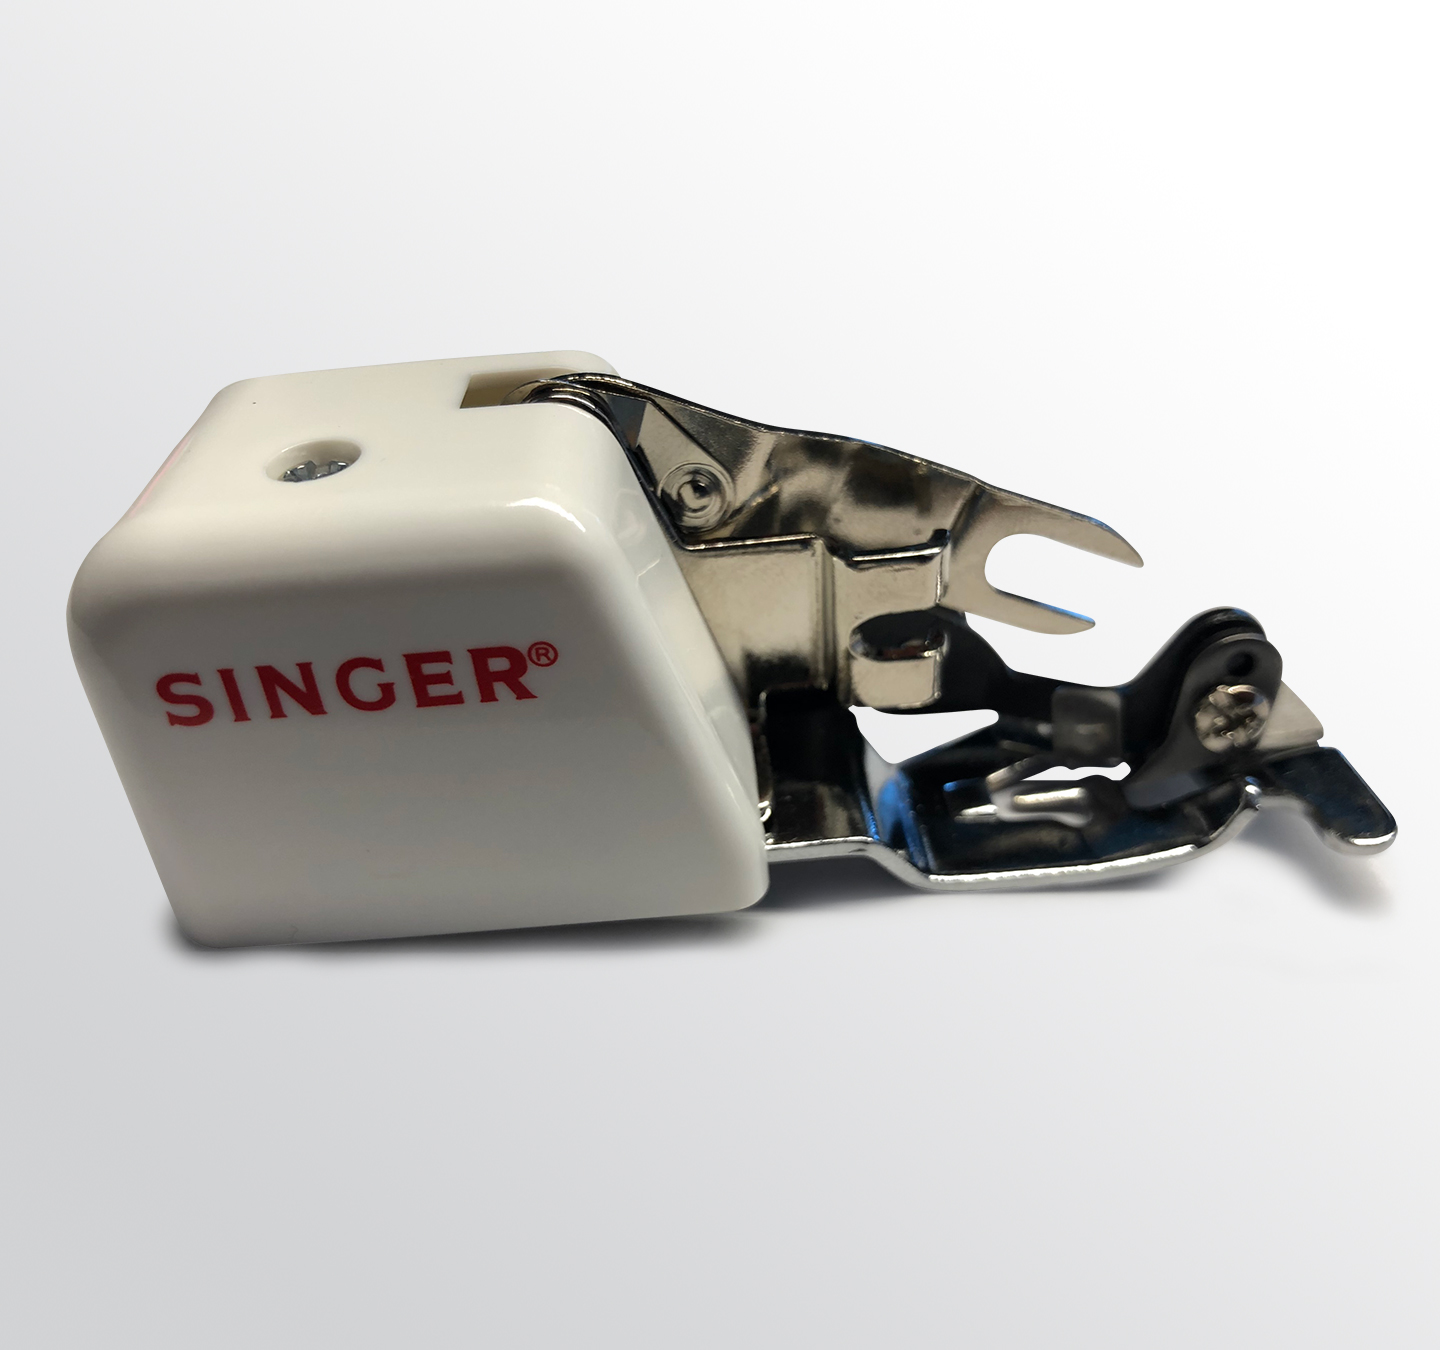 Singer Side Cutter Attachment